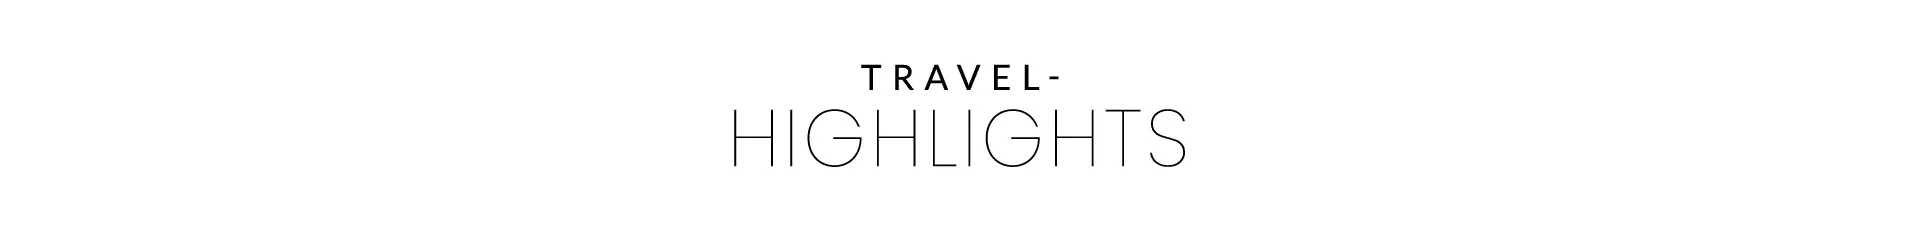 Travel Highlights